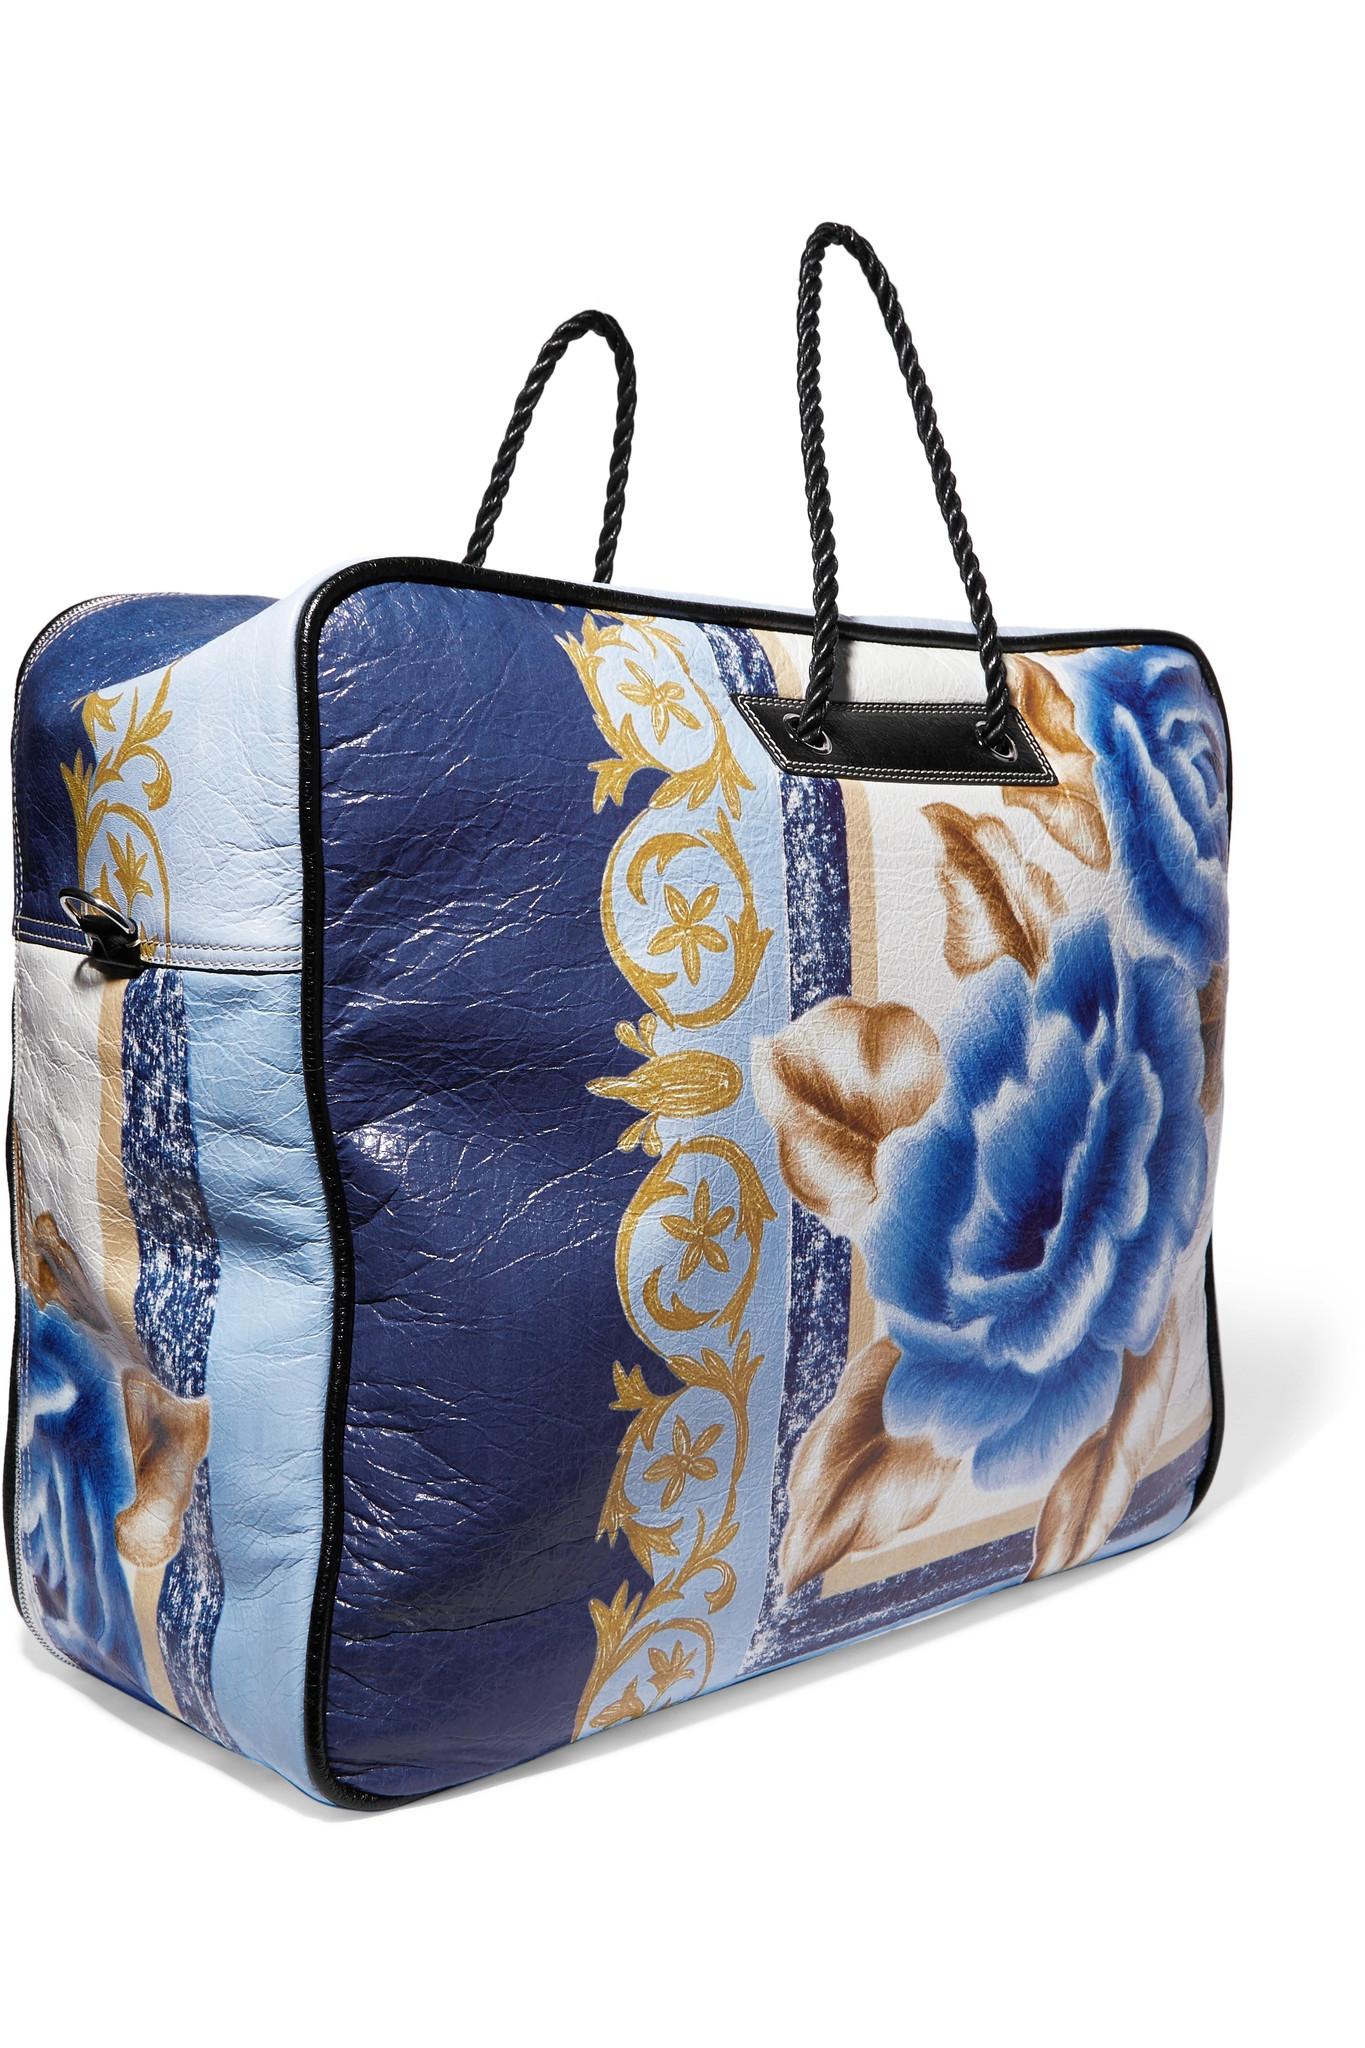 Balenciaga Blanket Printed Bag Top Sellers, 57% OFF | www.velocityusa.com